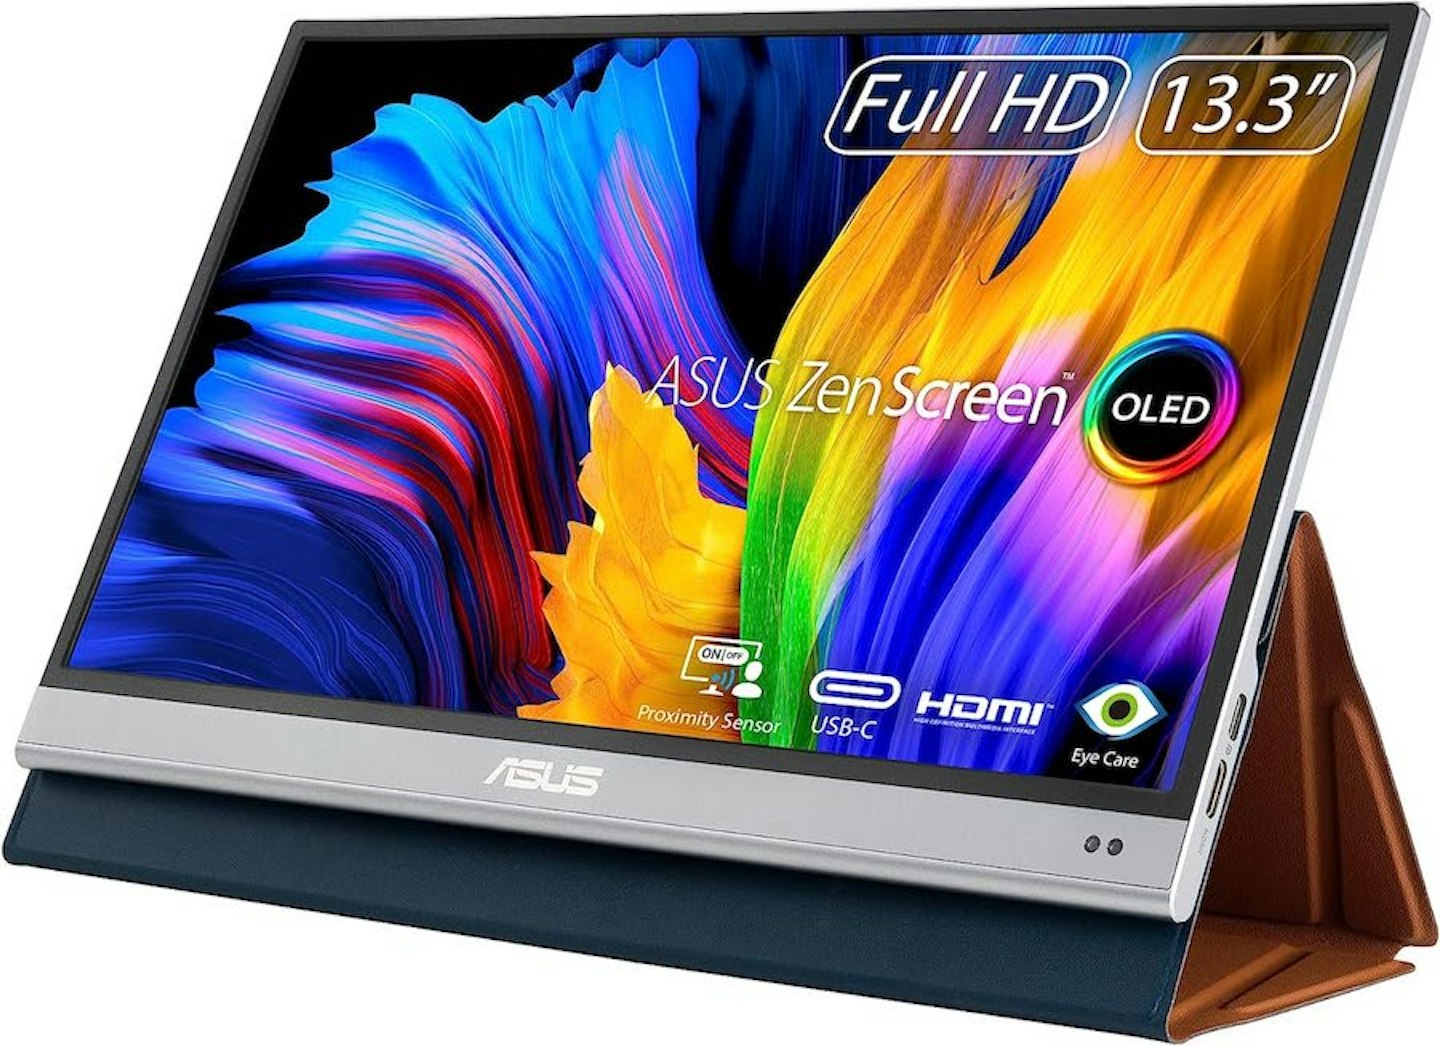 ASUS ZenScreen OLED Portable Gaming Monitor 13.3" 1080P FHD Laptop Monitor